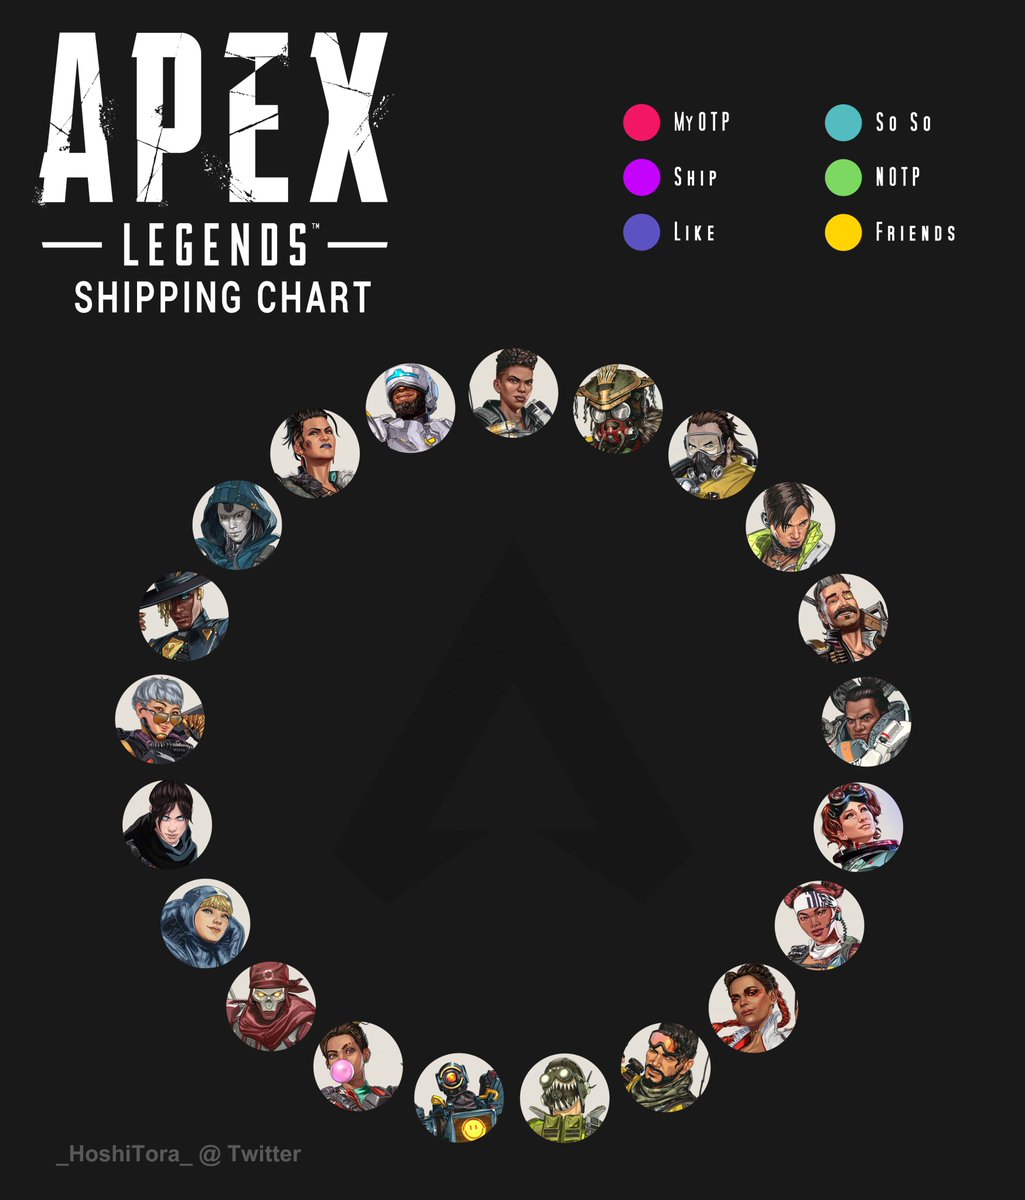 RT @_HoshiTora_: Updated Apex Legends Shipping chart! Season 13 hooray!
#ApexLegends https://t.co/vVmR0ljKxq